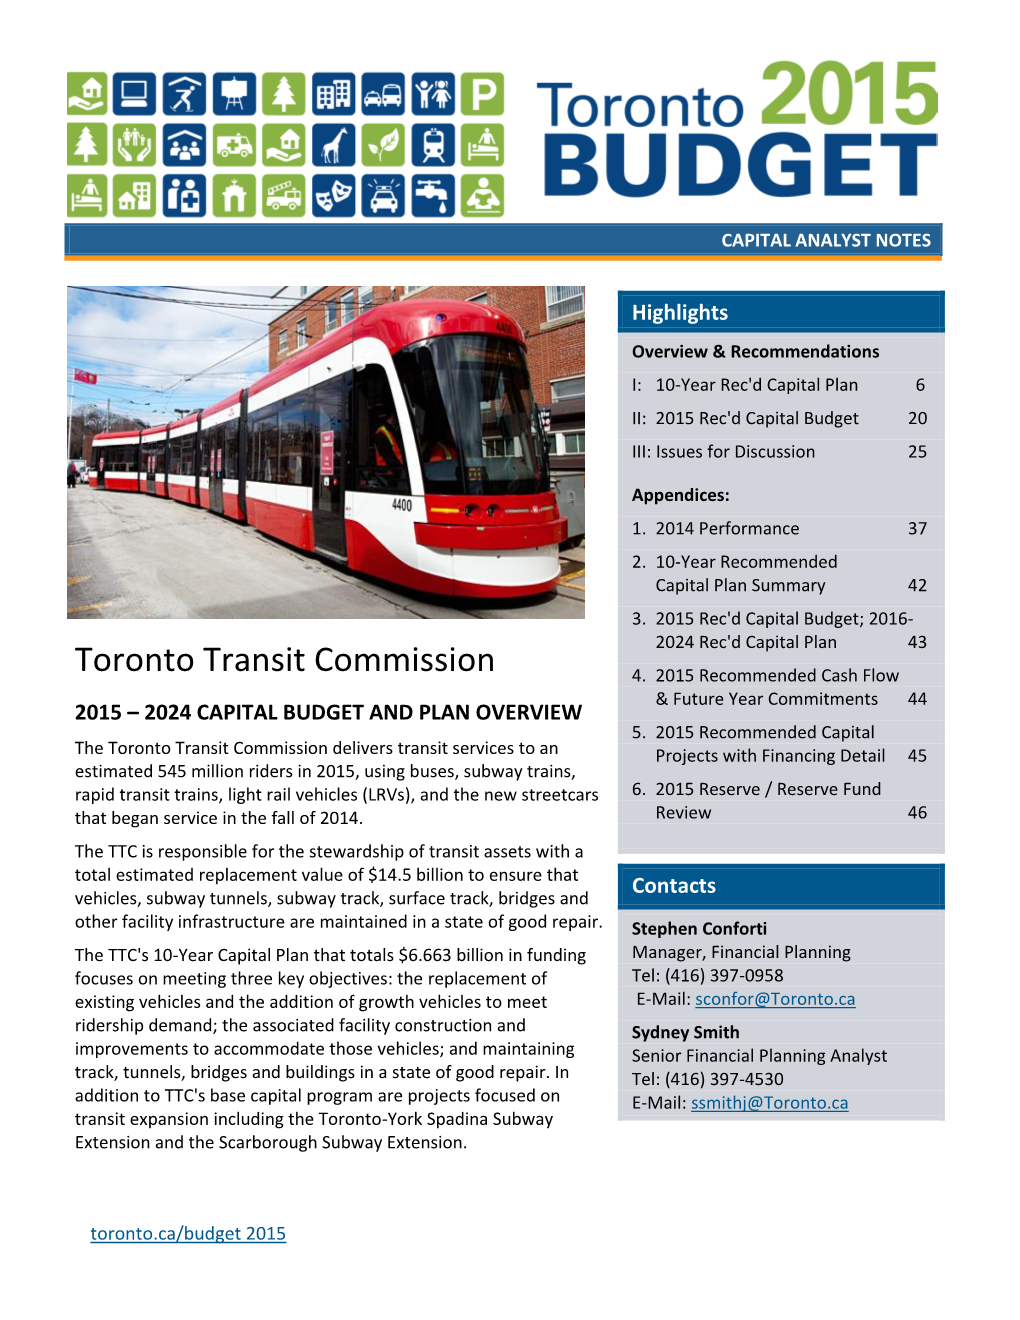 Toronto Transit Commission 4